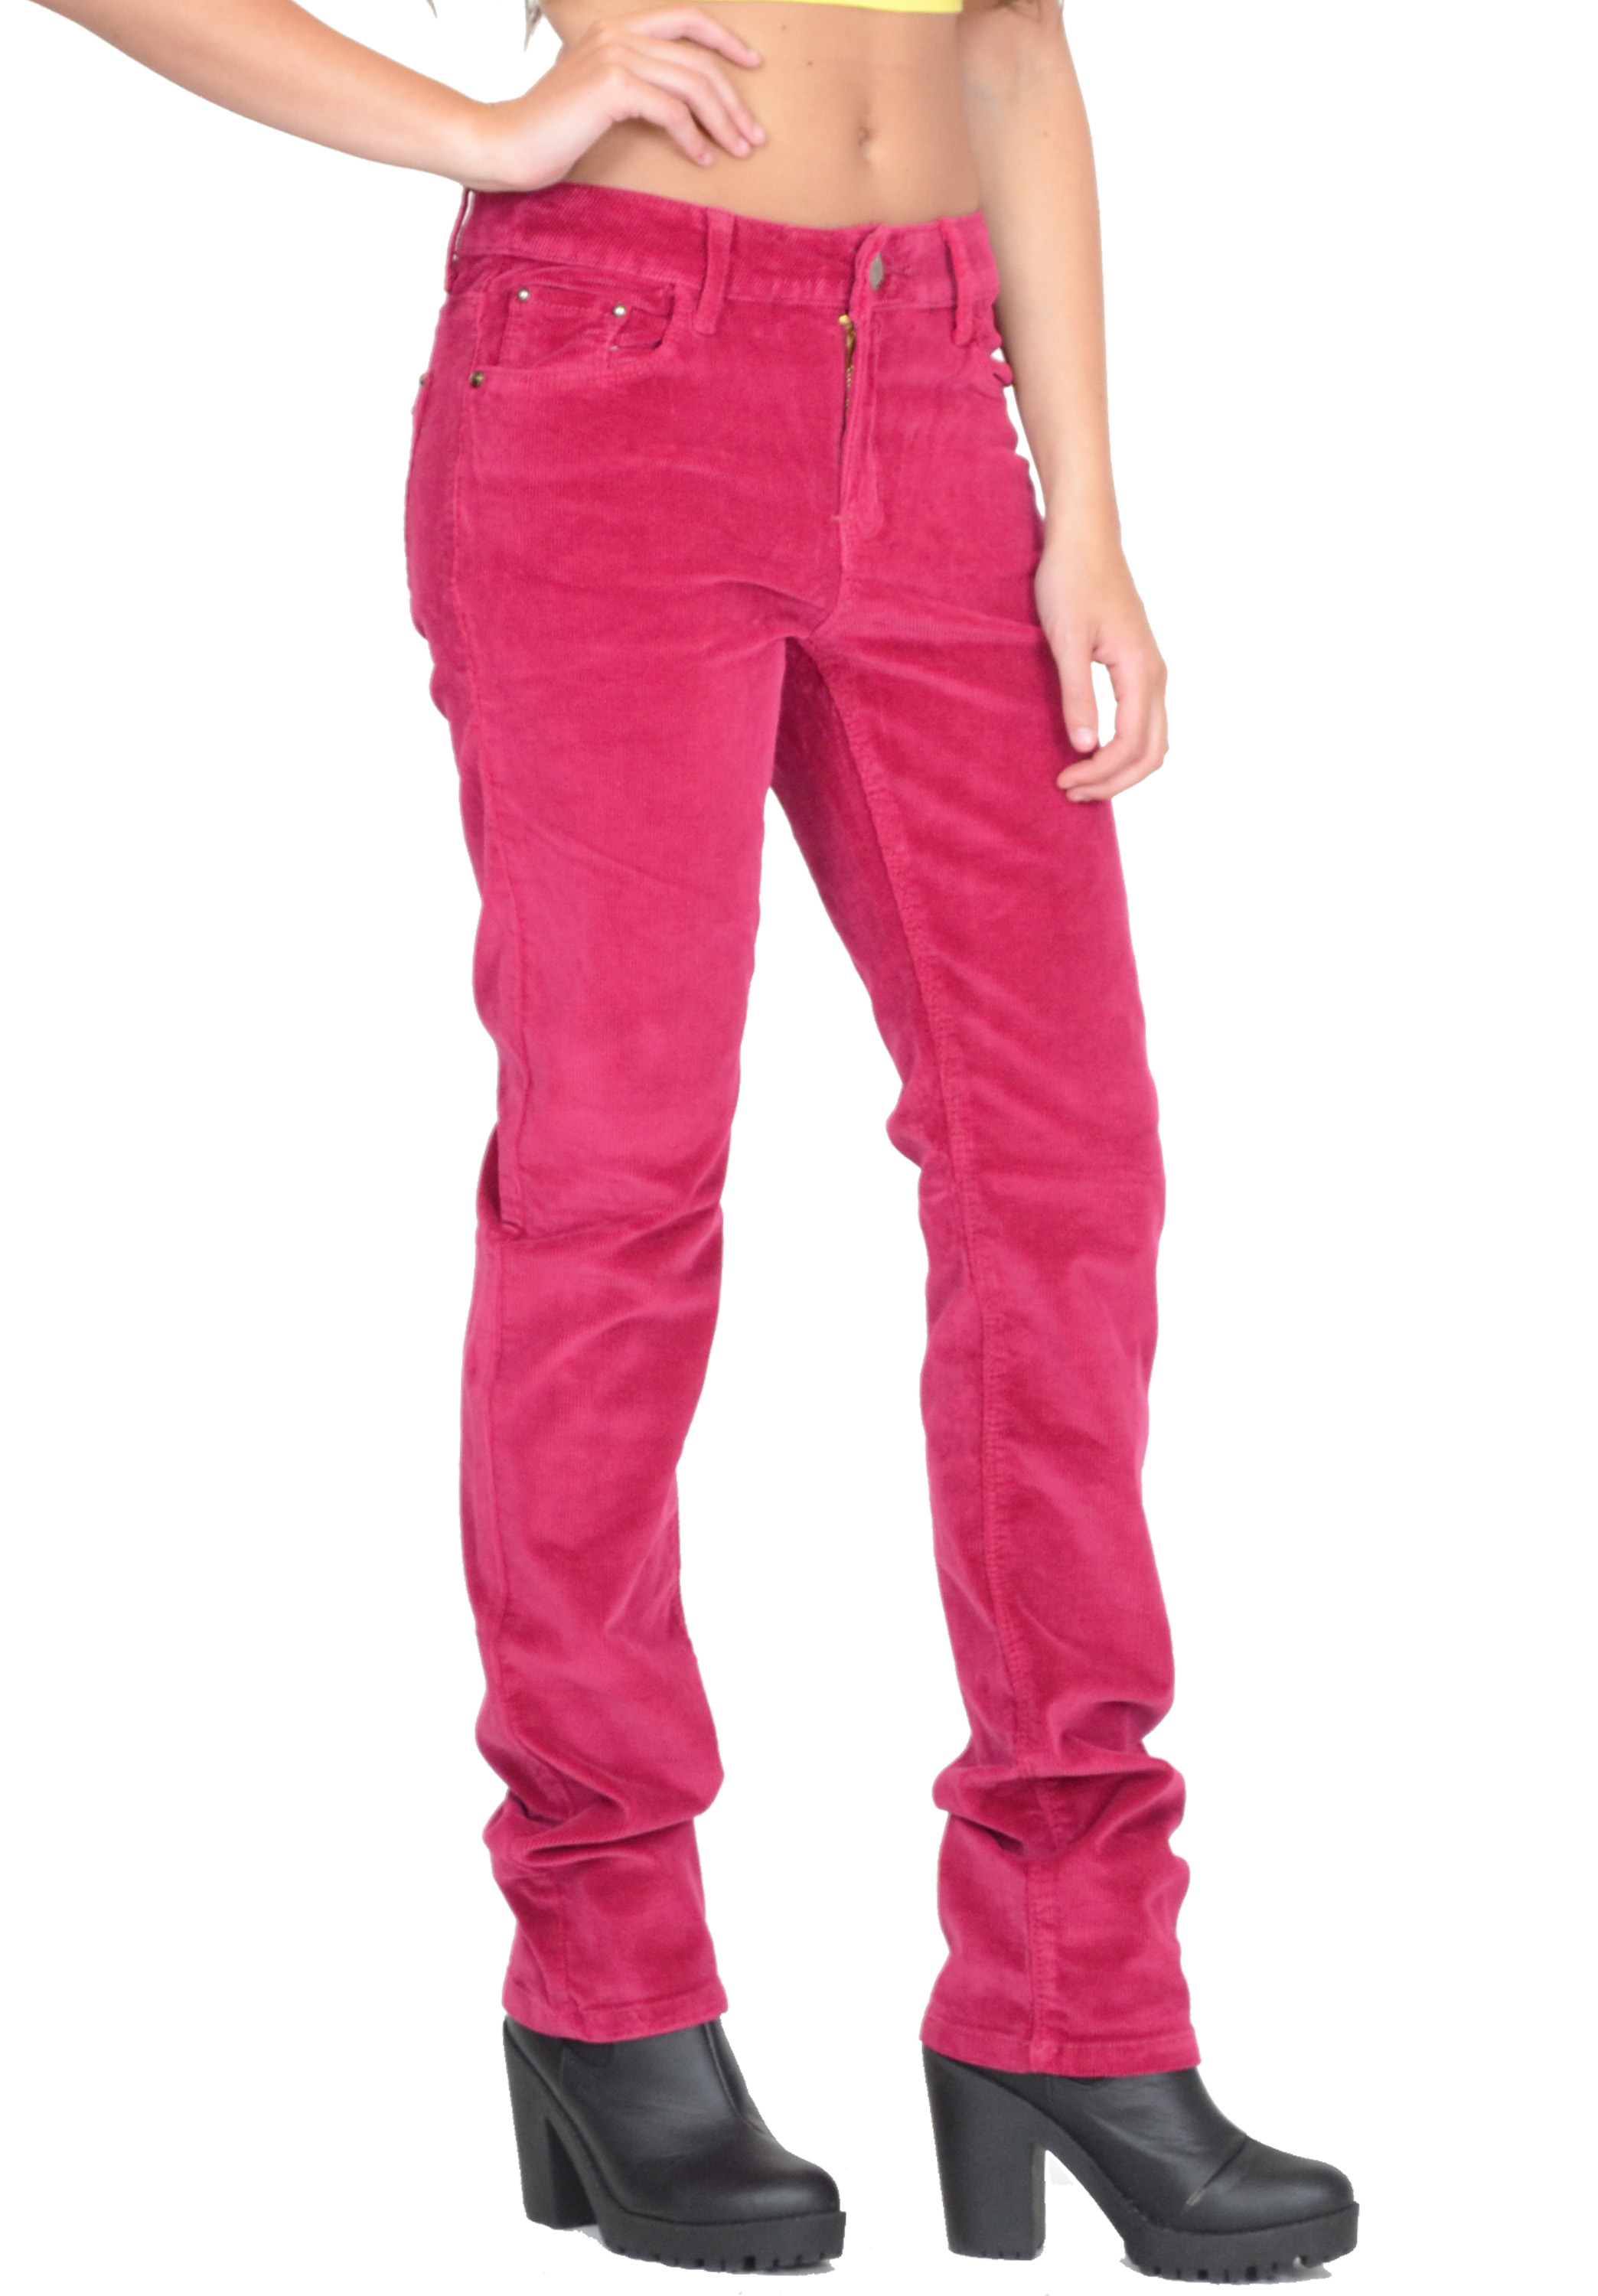 New Ladies Womens Slim Skinny Stretchy Cords Pink Corduroy Trousers Jeans Pants Ebay 